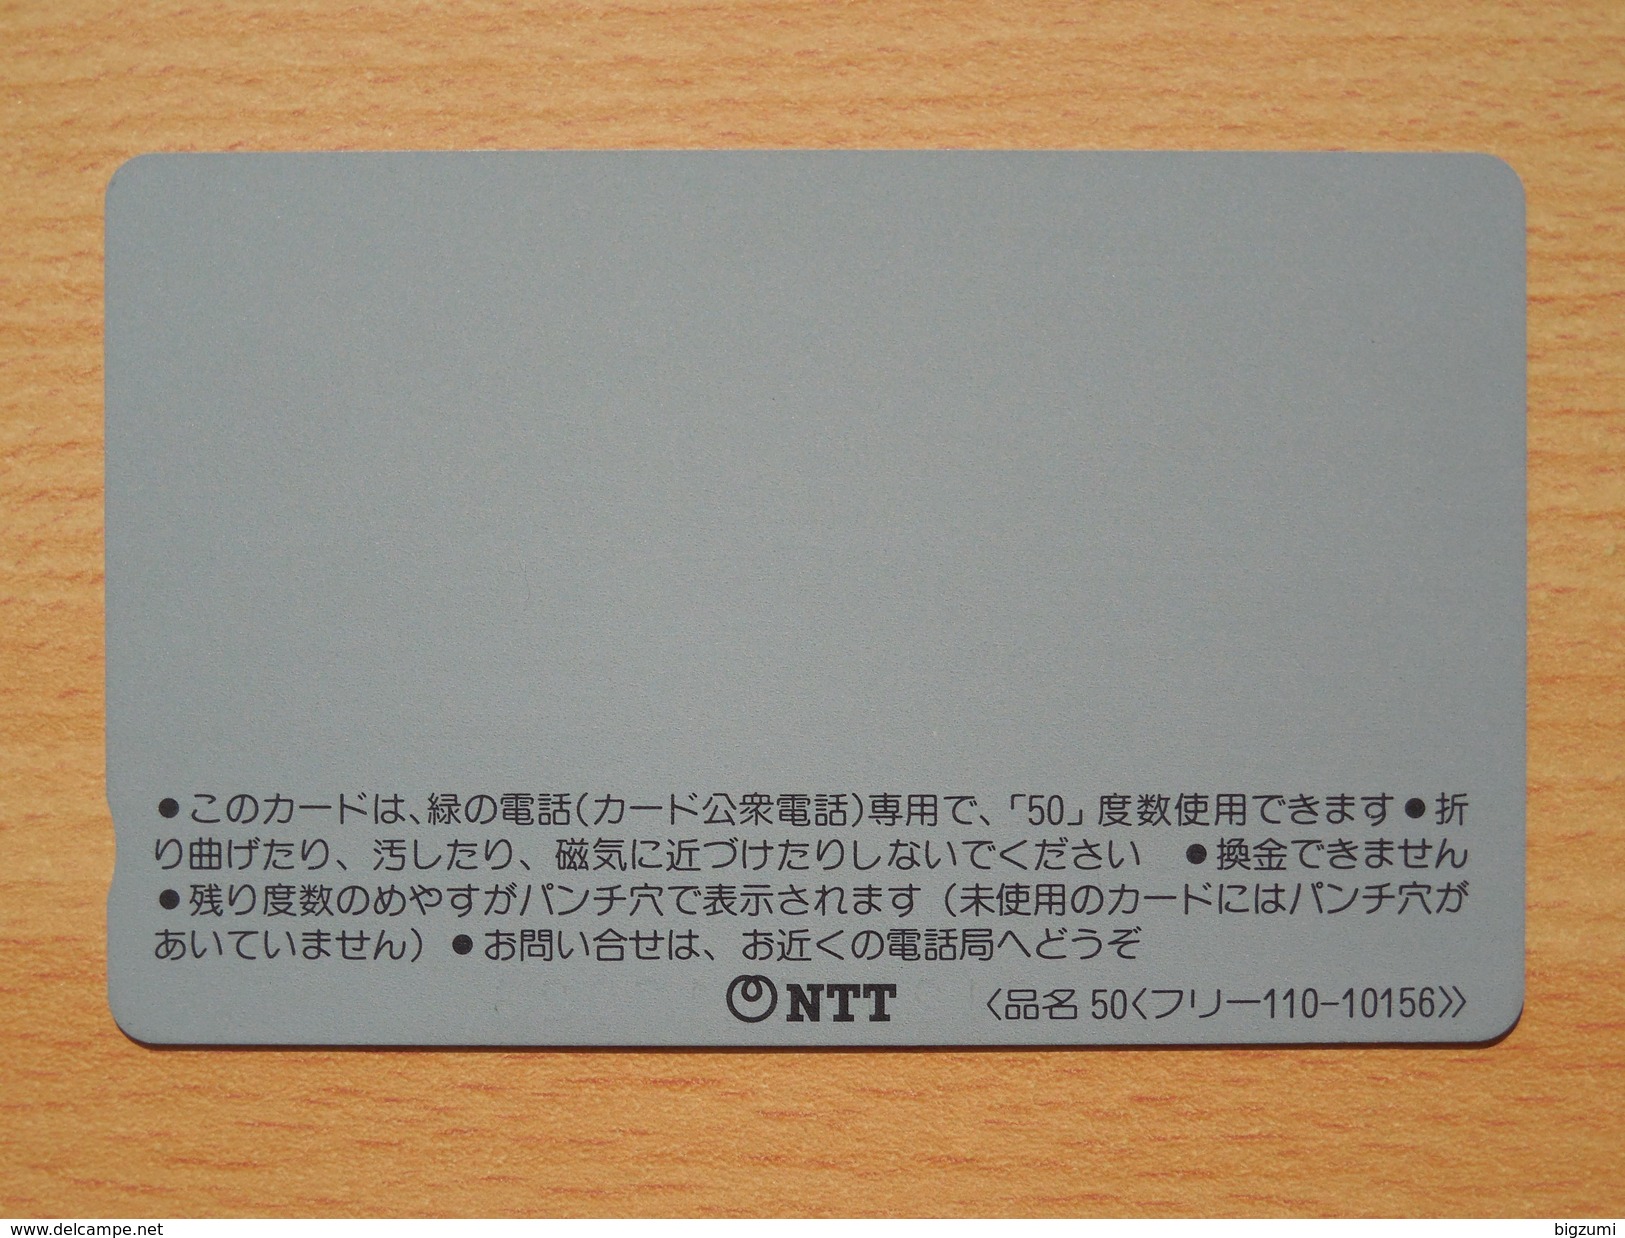 Japon Japan Free Front Bar Balken Phonecard - T - T Killer From The Past / Comic / Anime 110-10156 / Mint, Neu, Neuf - BD